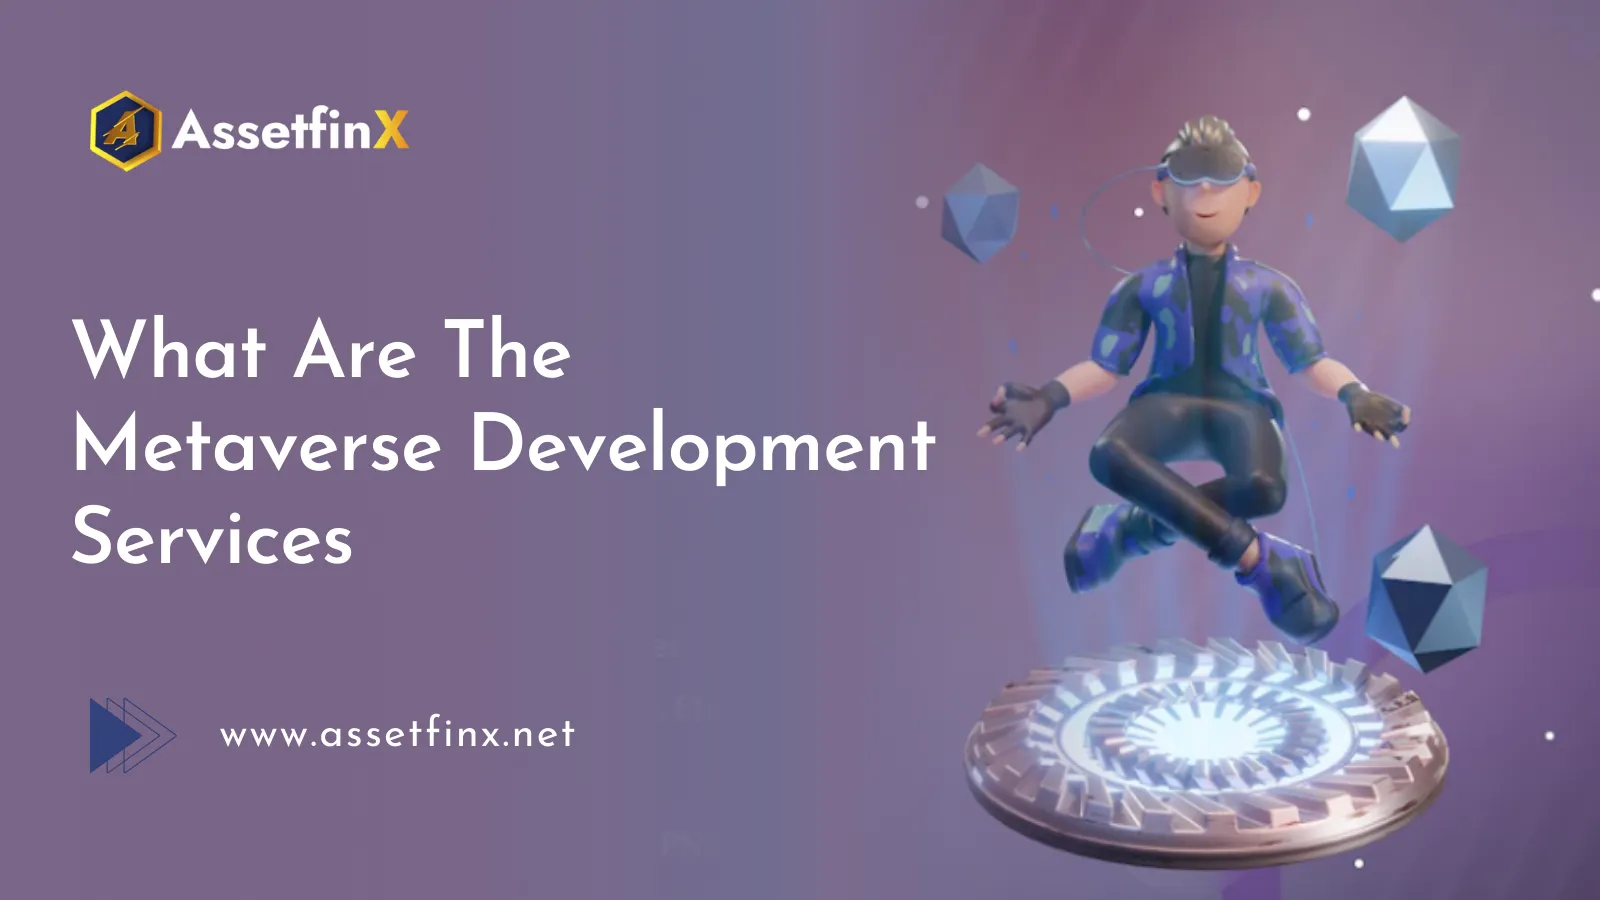 Assetfinx Provides Variant Featured Metaverse Development Services.